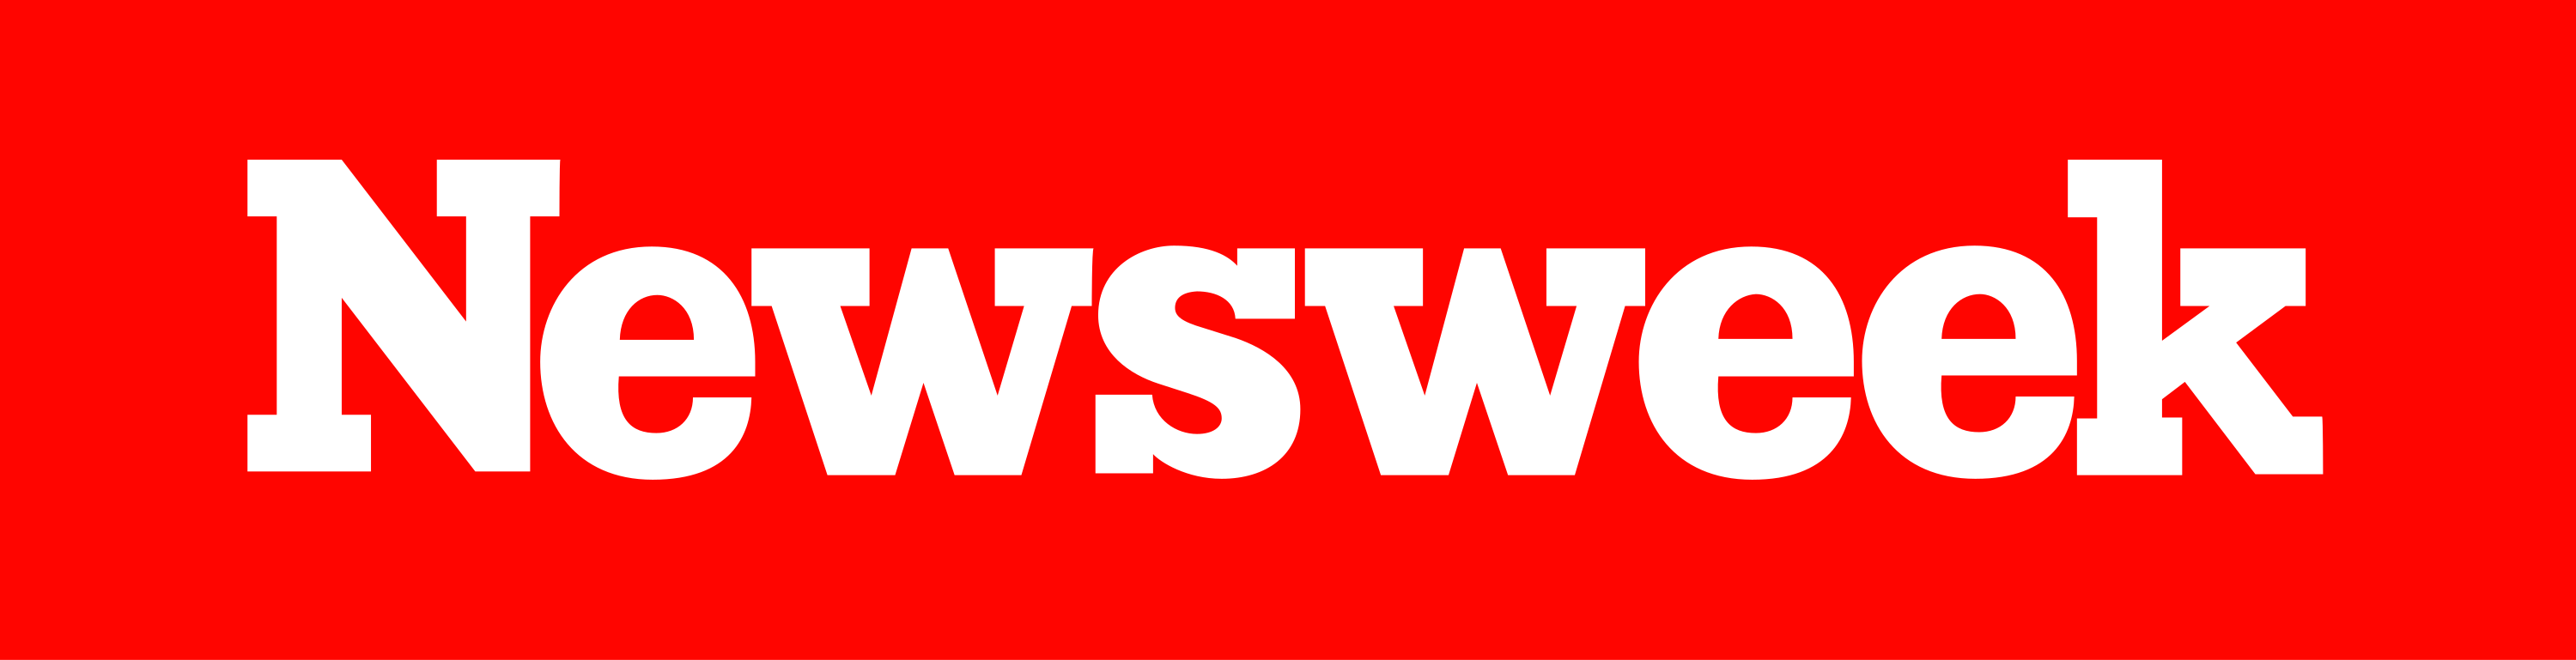 Newsweek baner